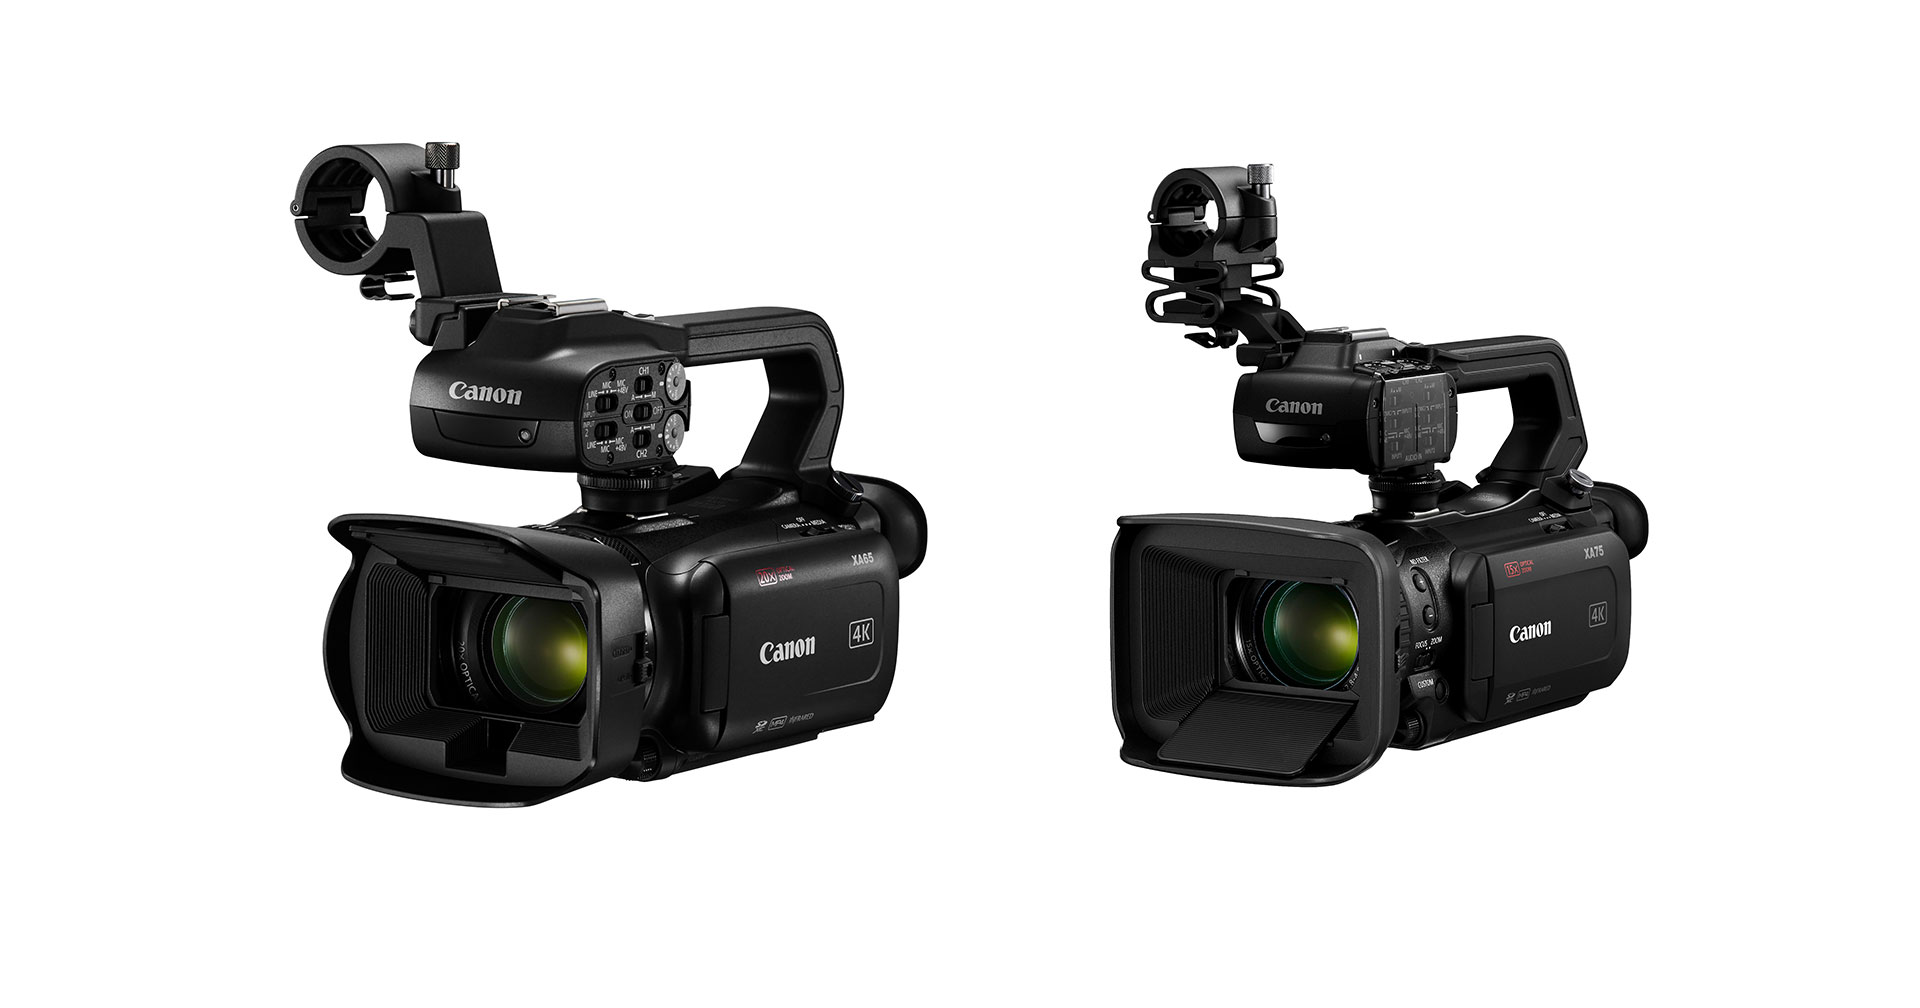 Canon เปิดตัวกล้องวิดีโอ 4K ตระกูล XA Series ตอบโจทย์งานสตรีมมิง ทรงพลัง อัดแน่นด้วยฟีเจอร์ระดับมืออาชีพ